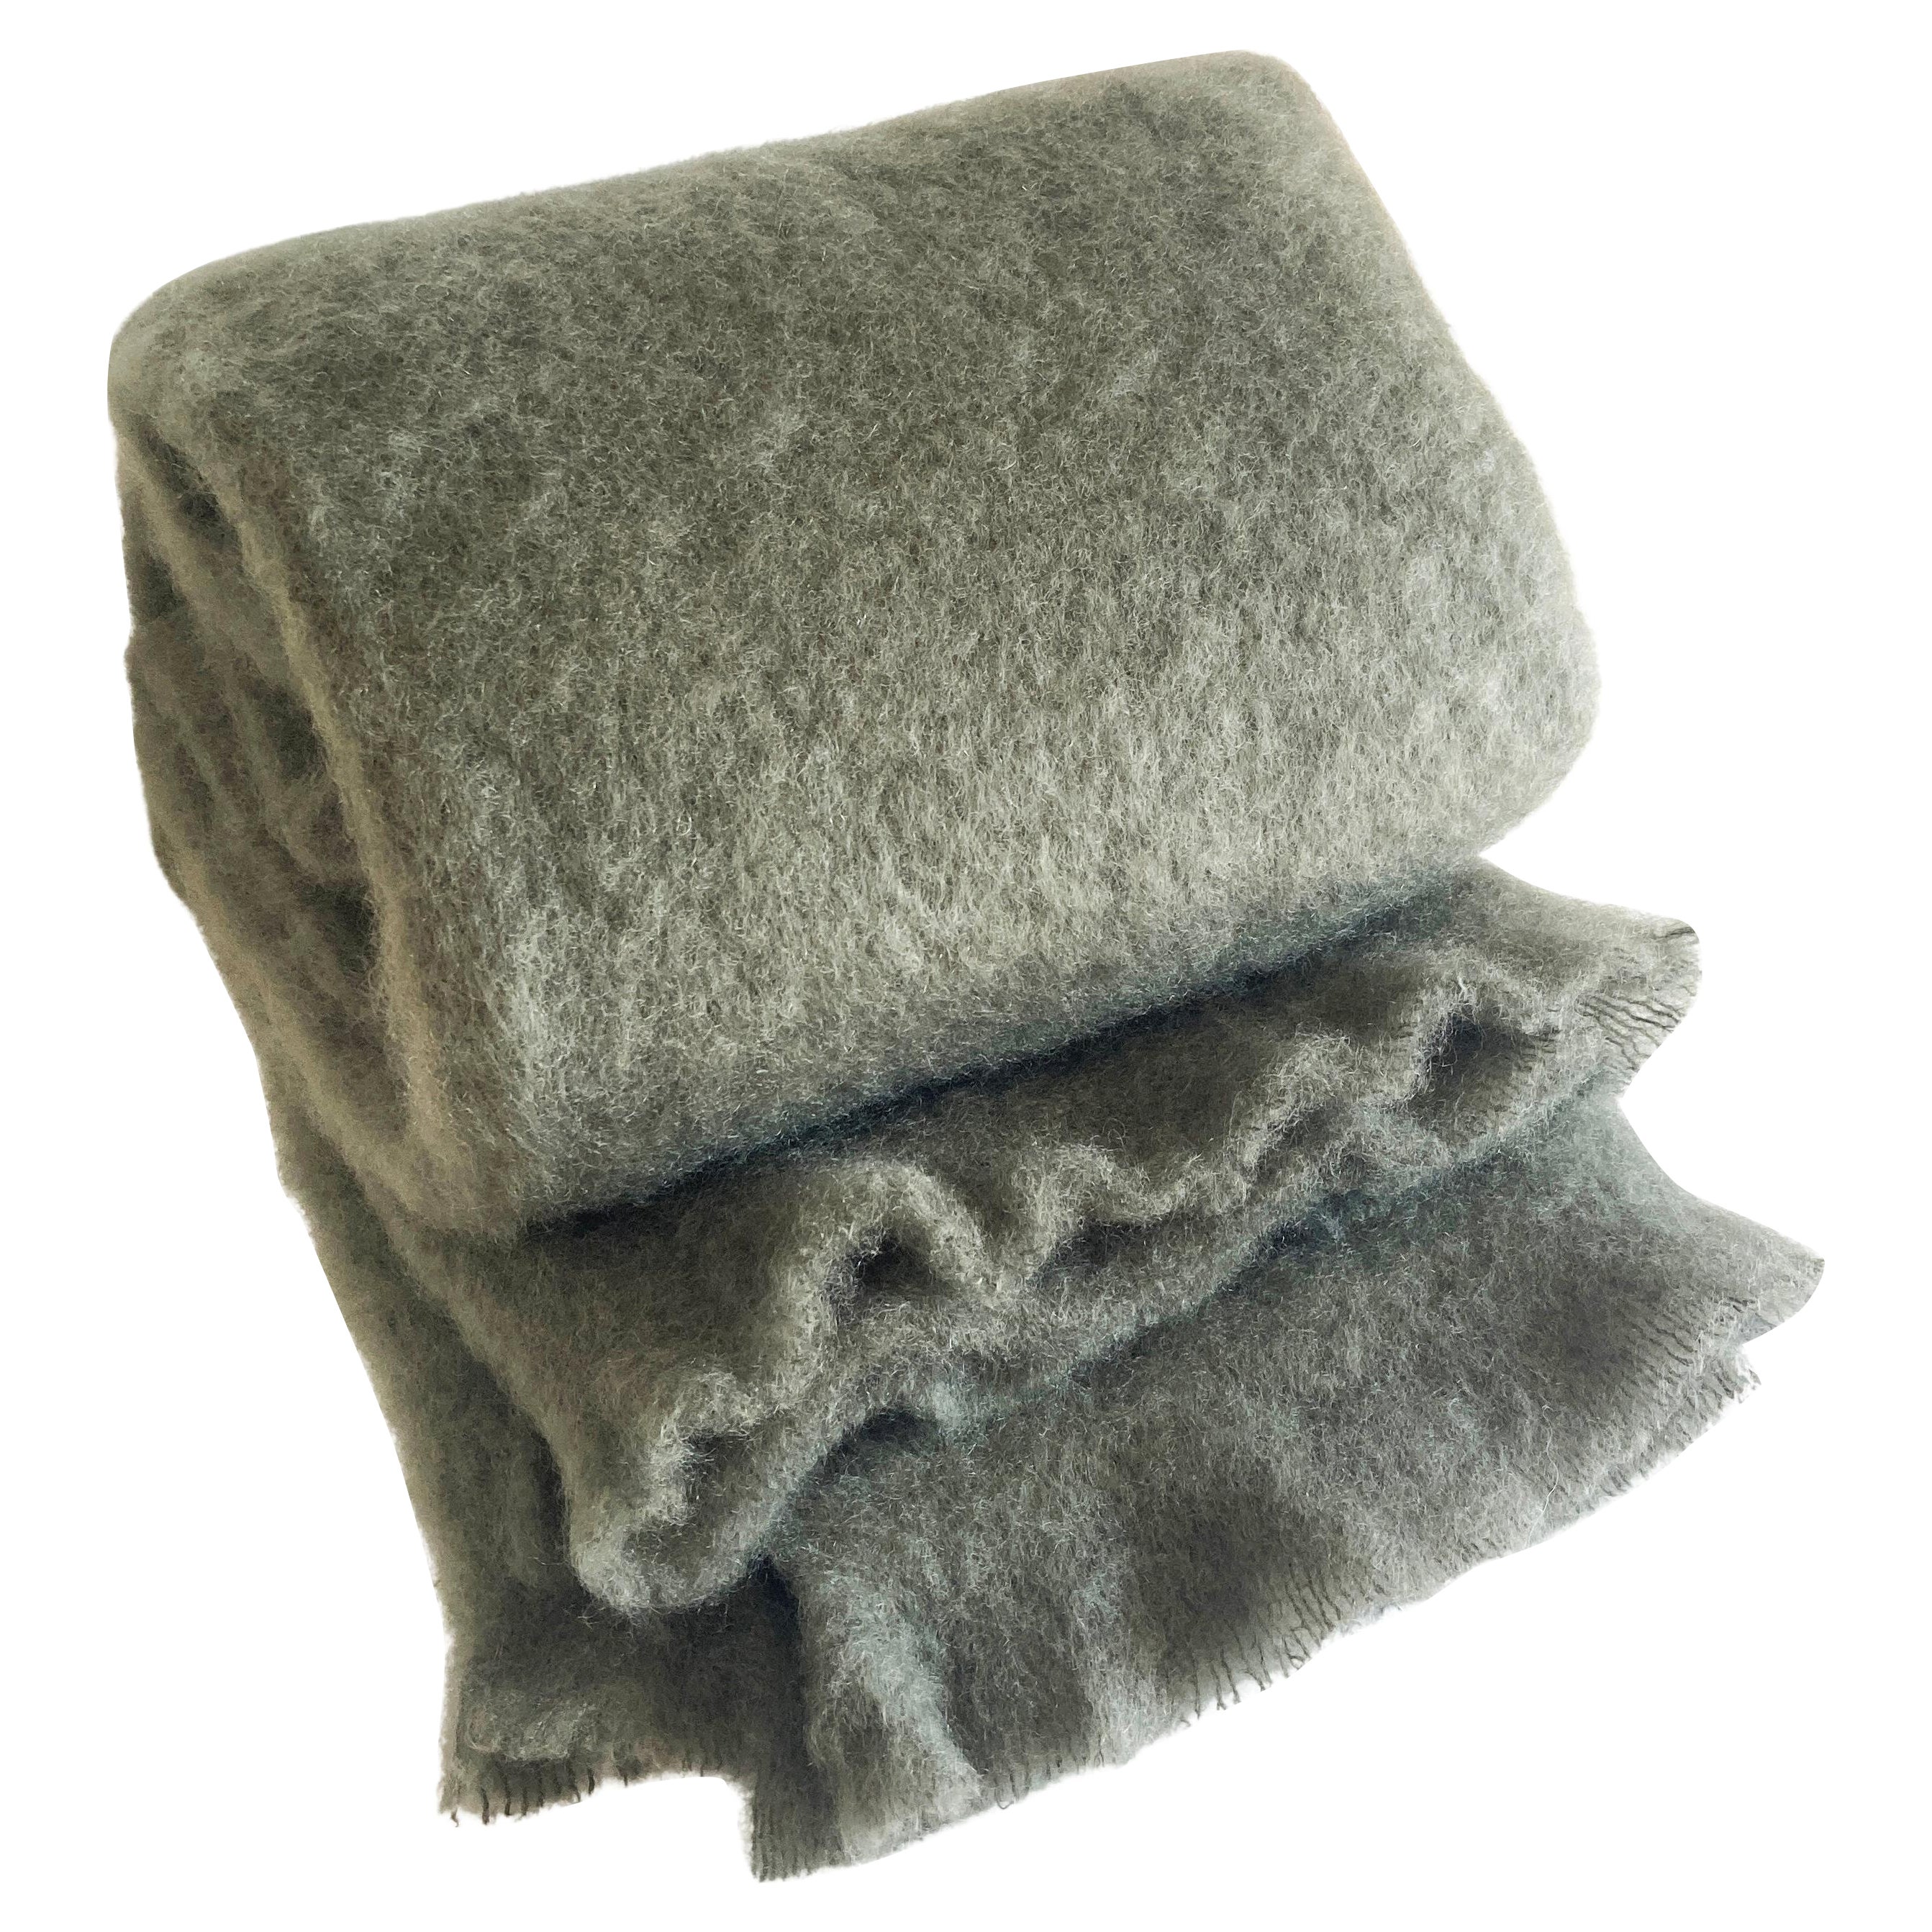 Handmade Soft Mohair Blanket Throw in Moss Green, in Stock